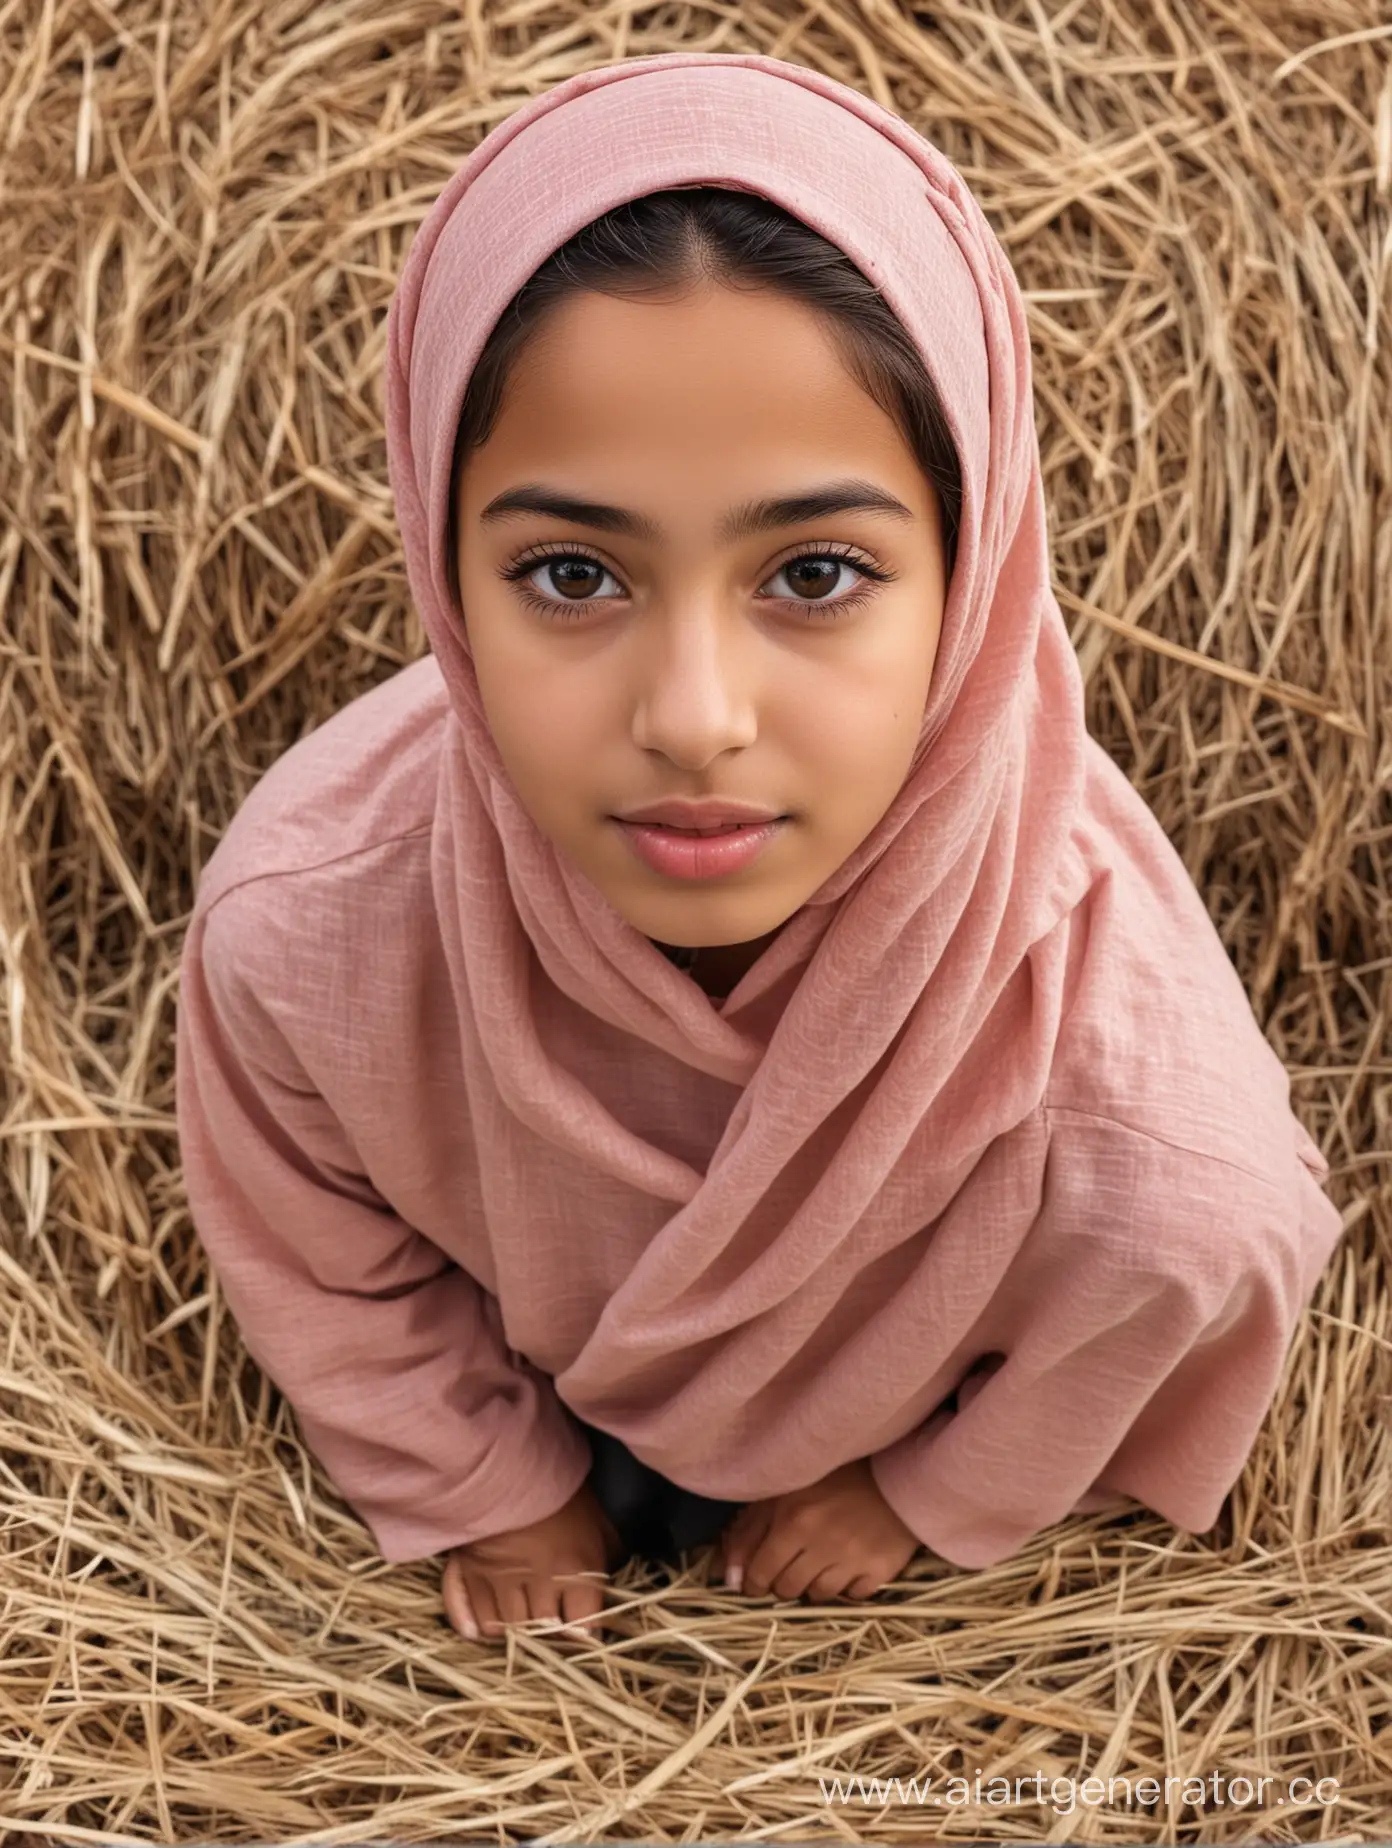 Adorable-12YearOld-Latina-Girl-in-Hijab-Posing-on-Hay-Bales